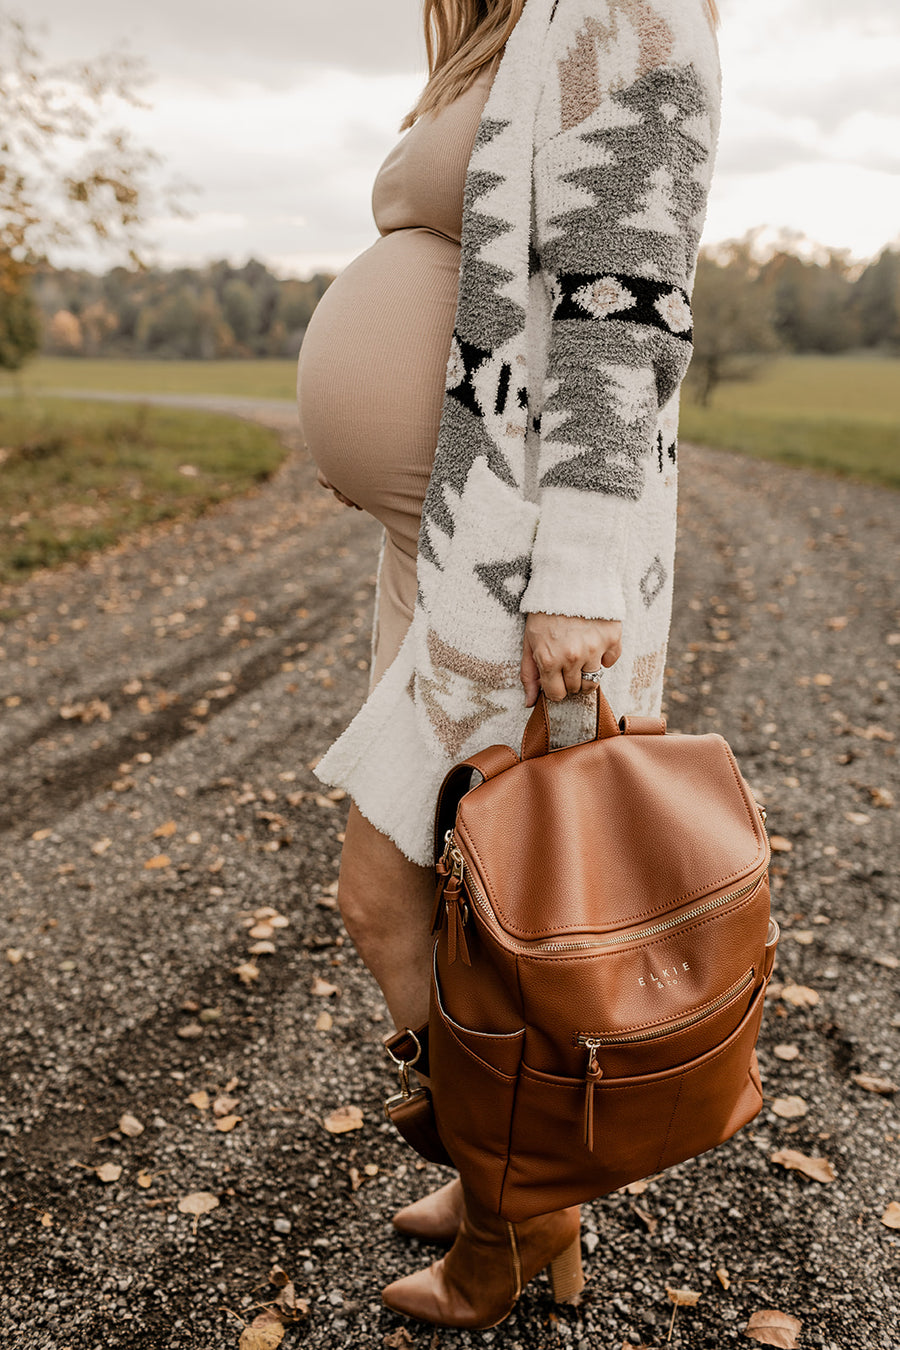 Pregnant woman holding Saddle Capri diaper bag by grab handle